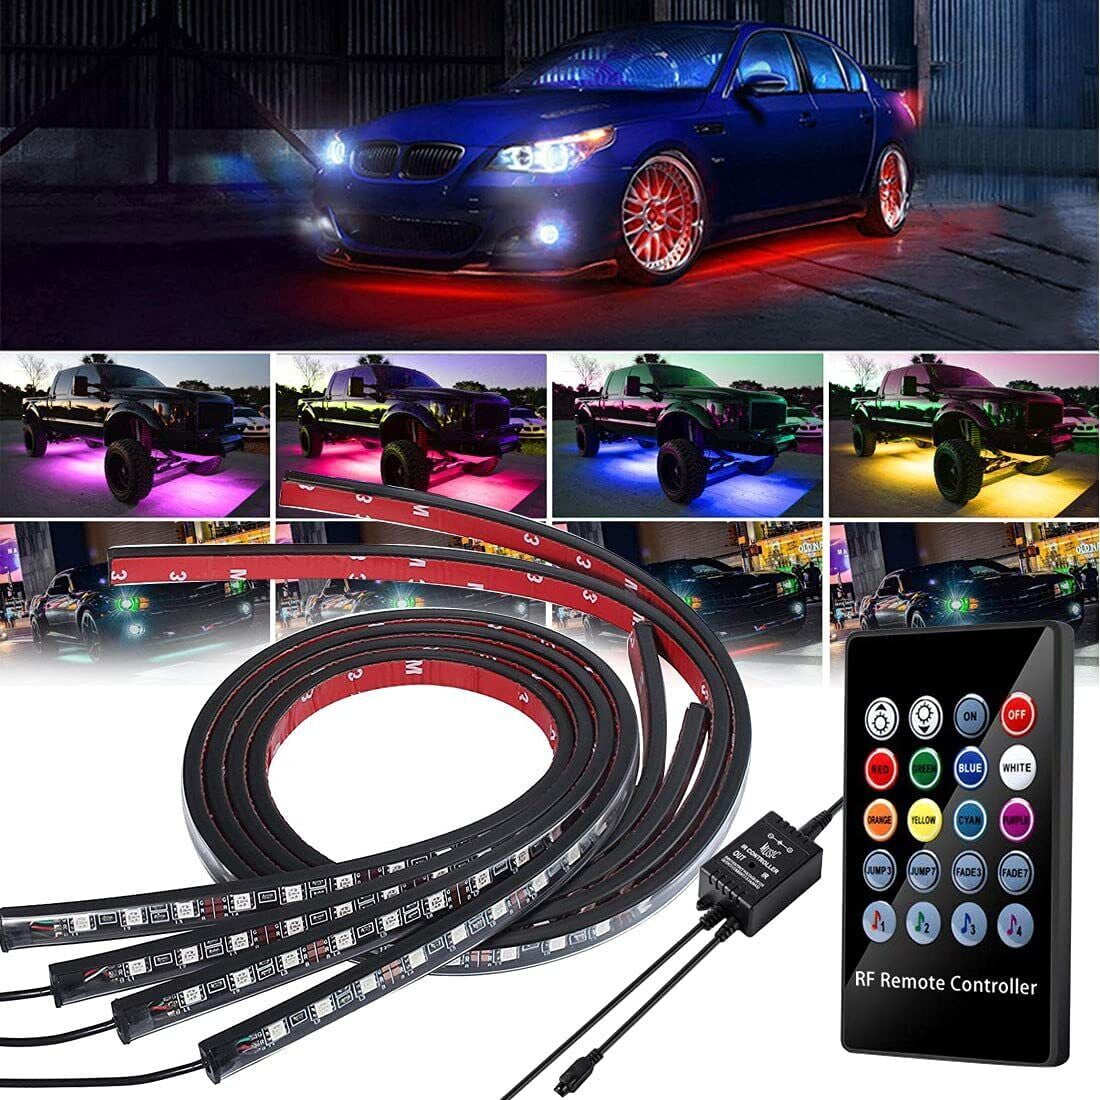 Car Underglow RGB Decorative Neon Light - Onlinehub at Rs 3600/set